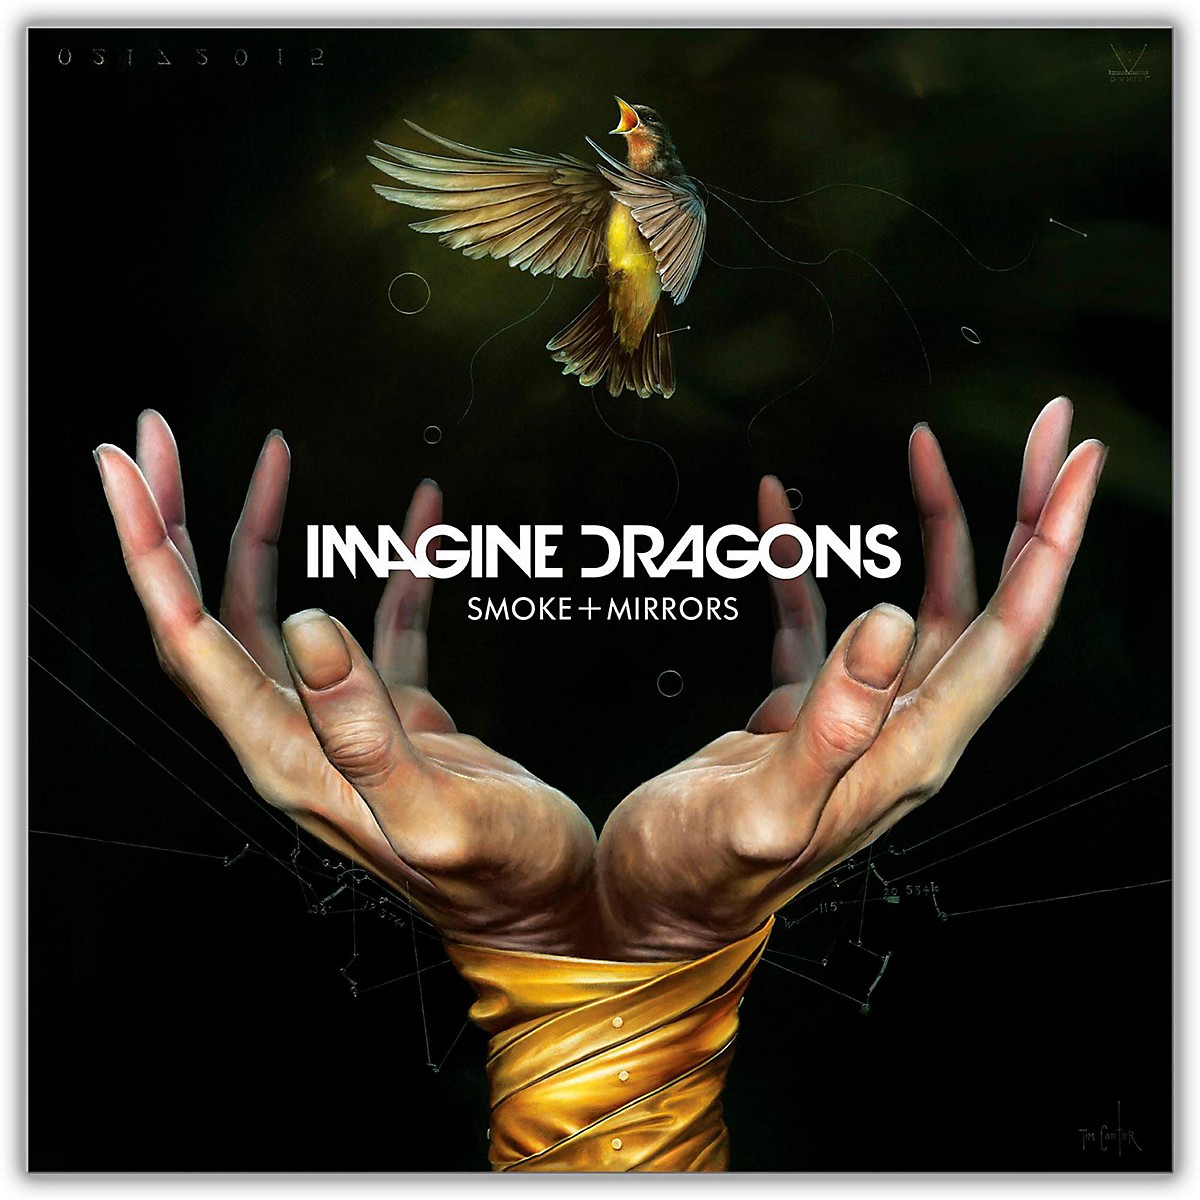 Imagine dragons album new enfalas